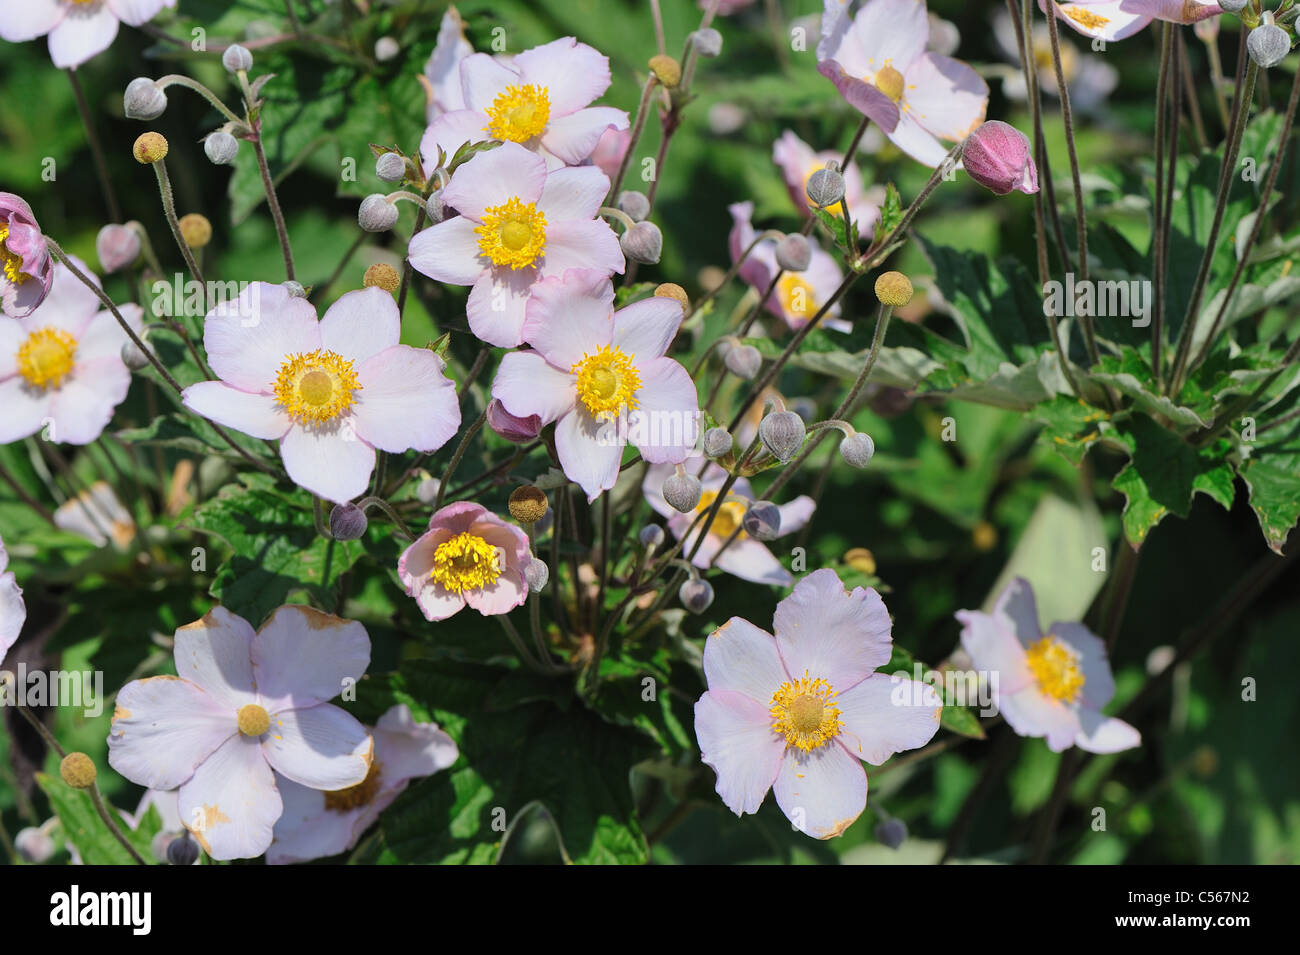 Narcissus-flowered anemone - Narcissus Anemone (Anemone narcissiflora) flowering in summer Stock Photo